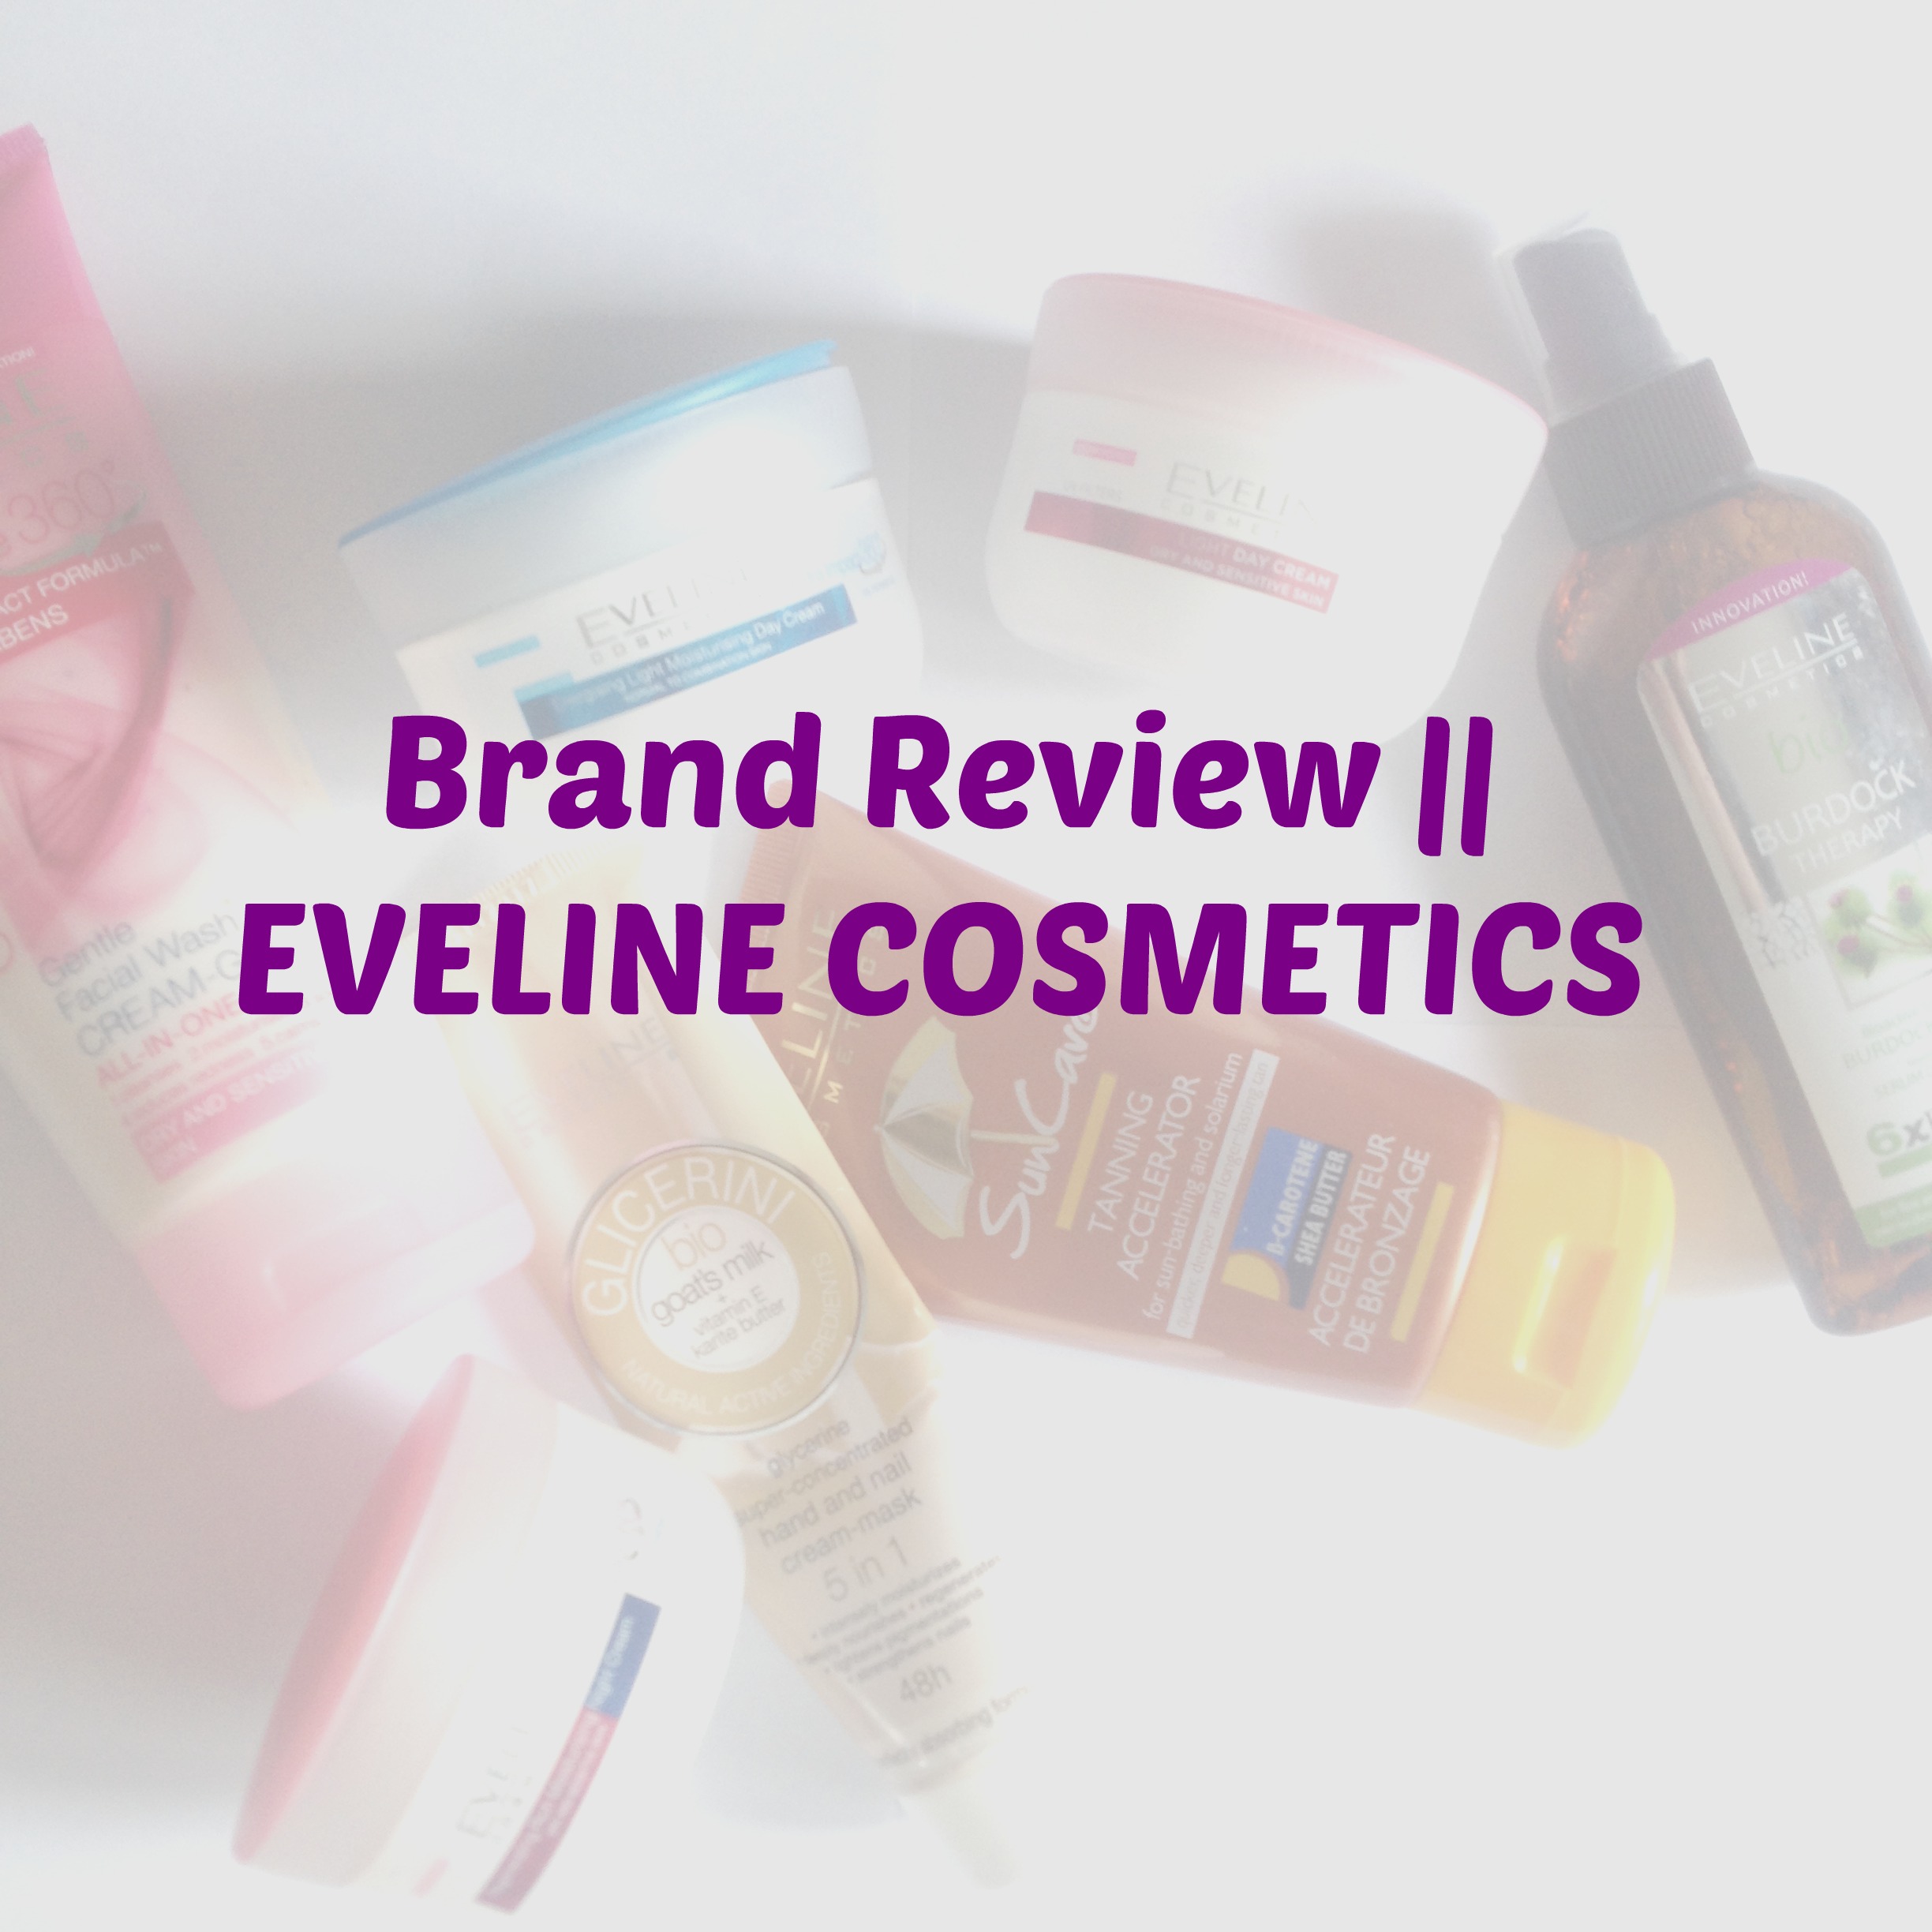 Brand Review || EVELINE COSMETICS